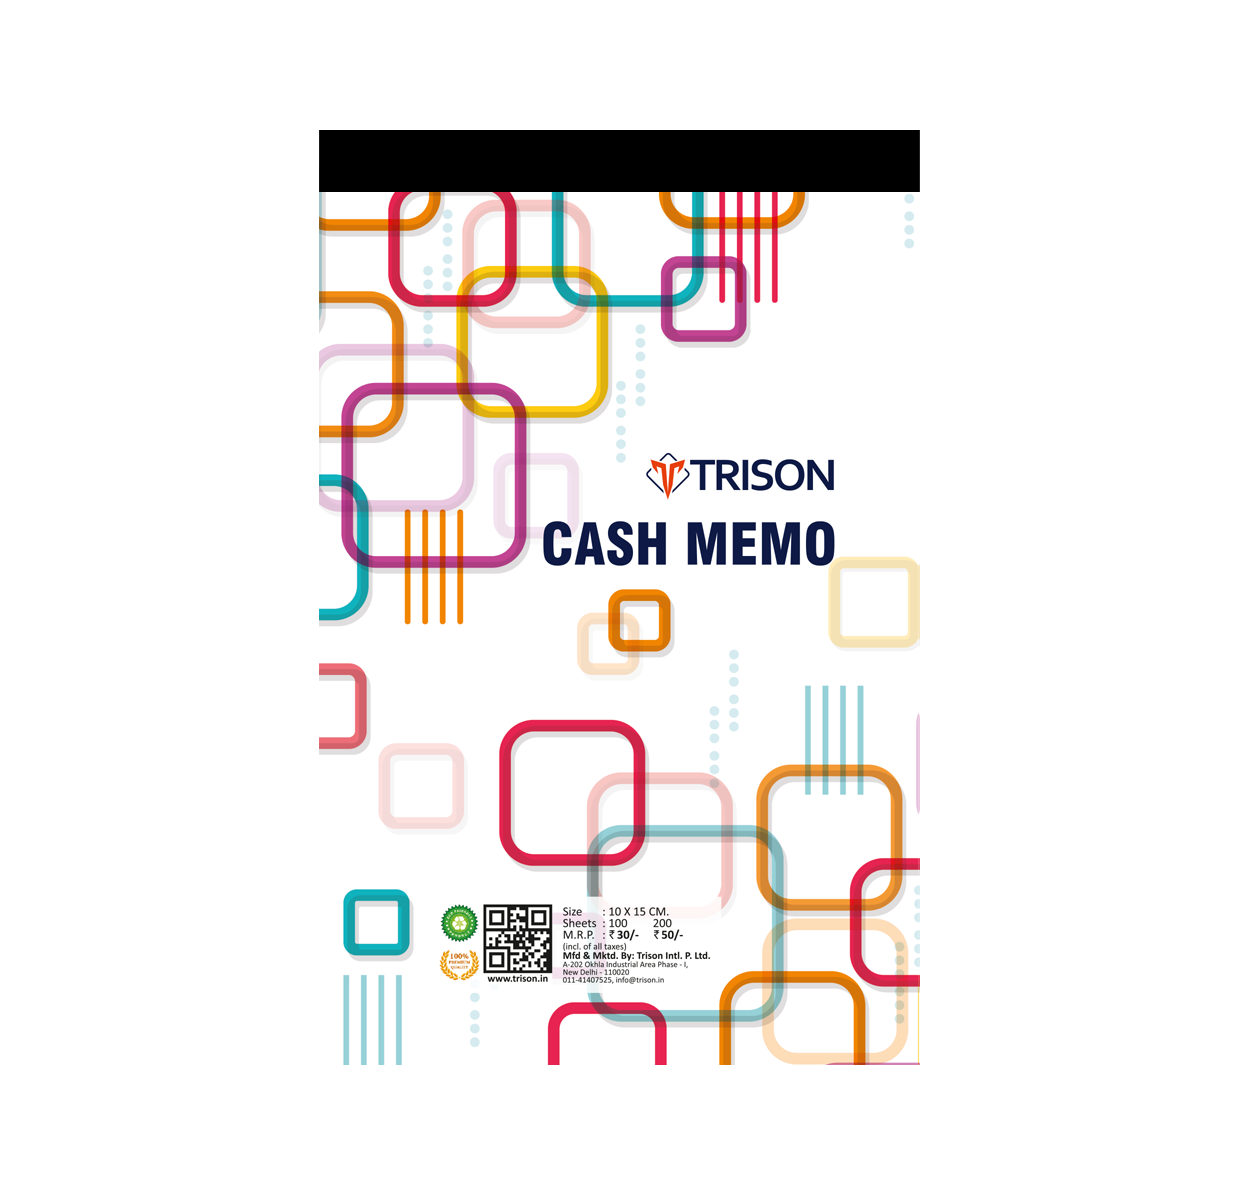 Trison Cash Memo